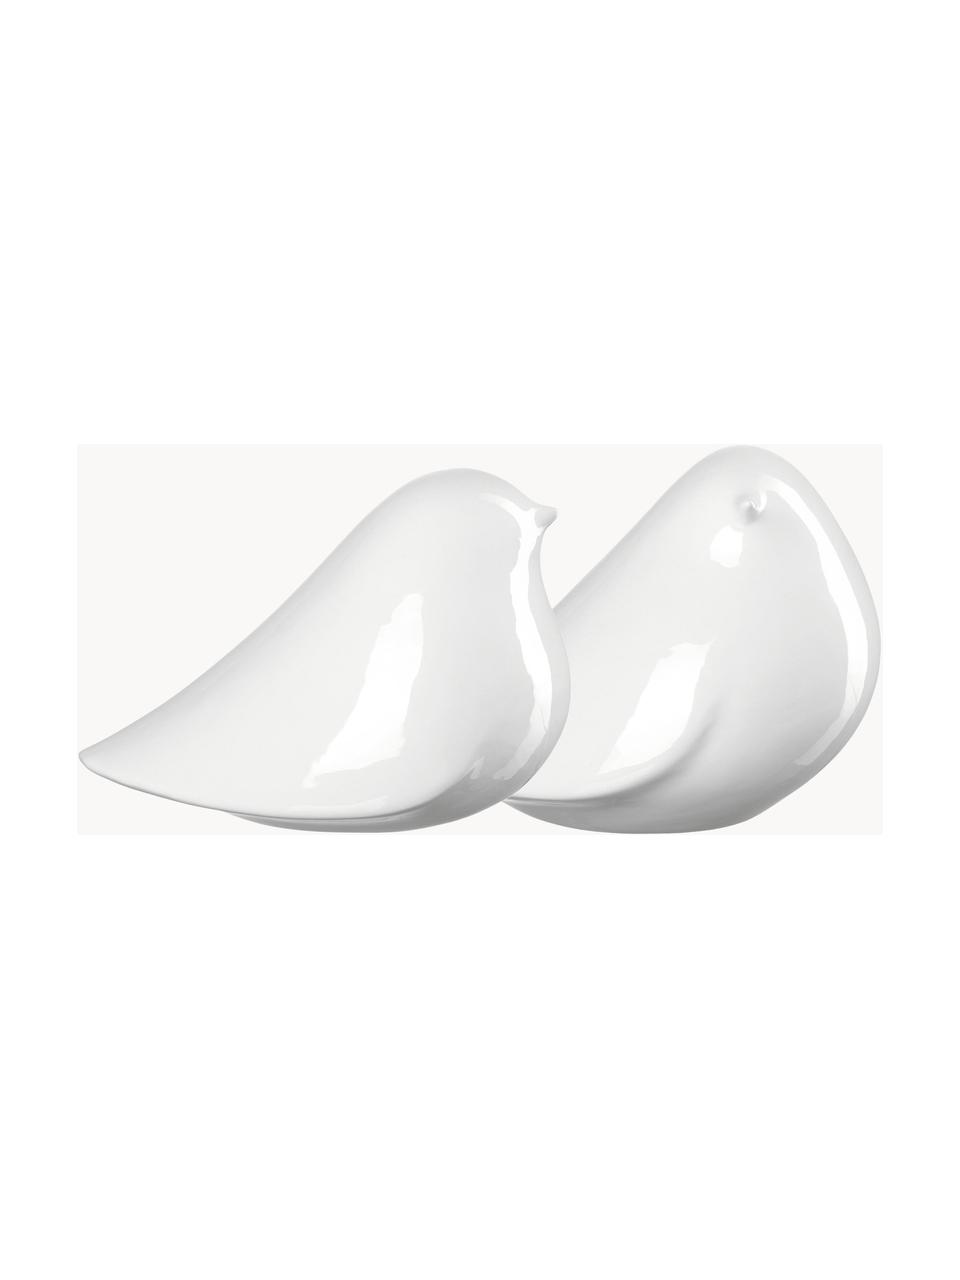 Deko-Vögel Alassio aus Porzellan, 2er-Set, Porzellan, Weiß, B 16 x H 11 cm